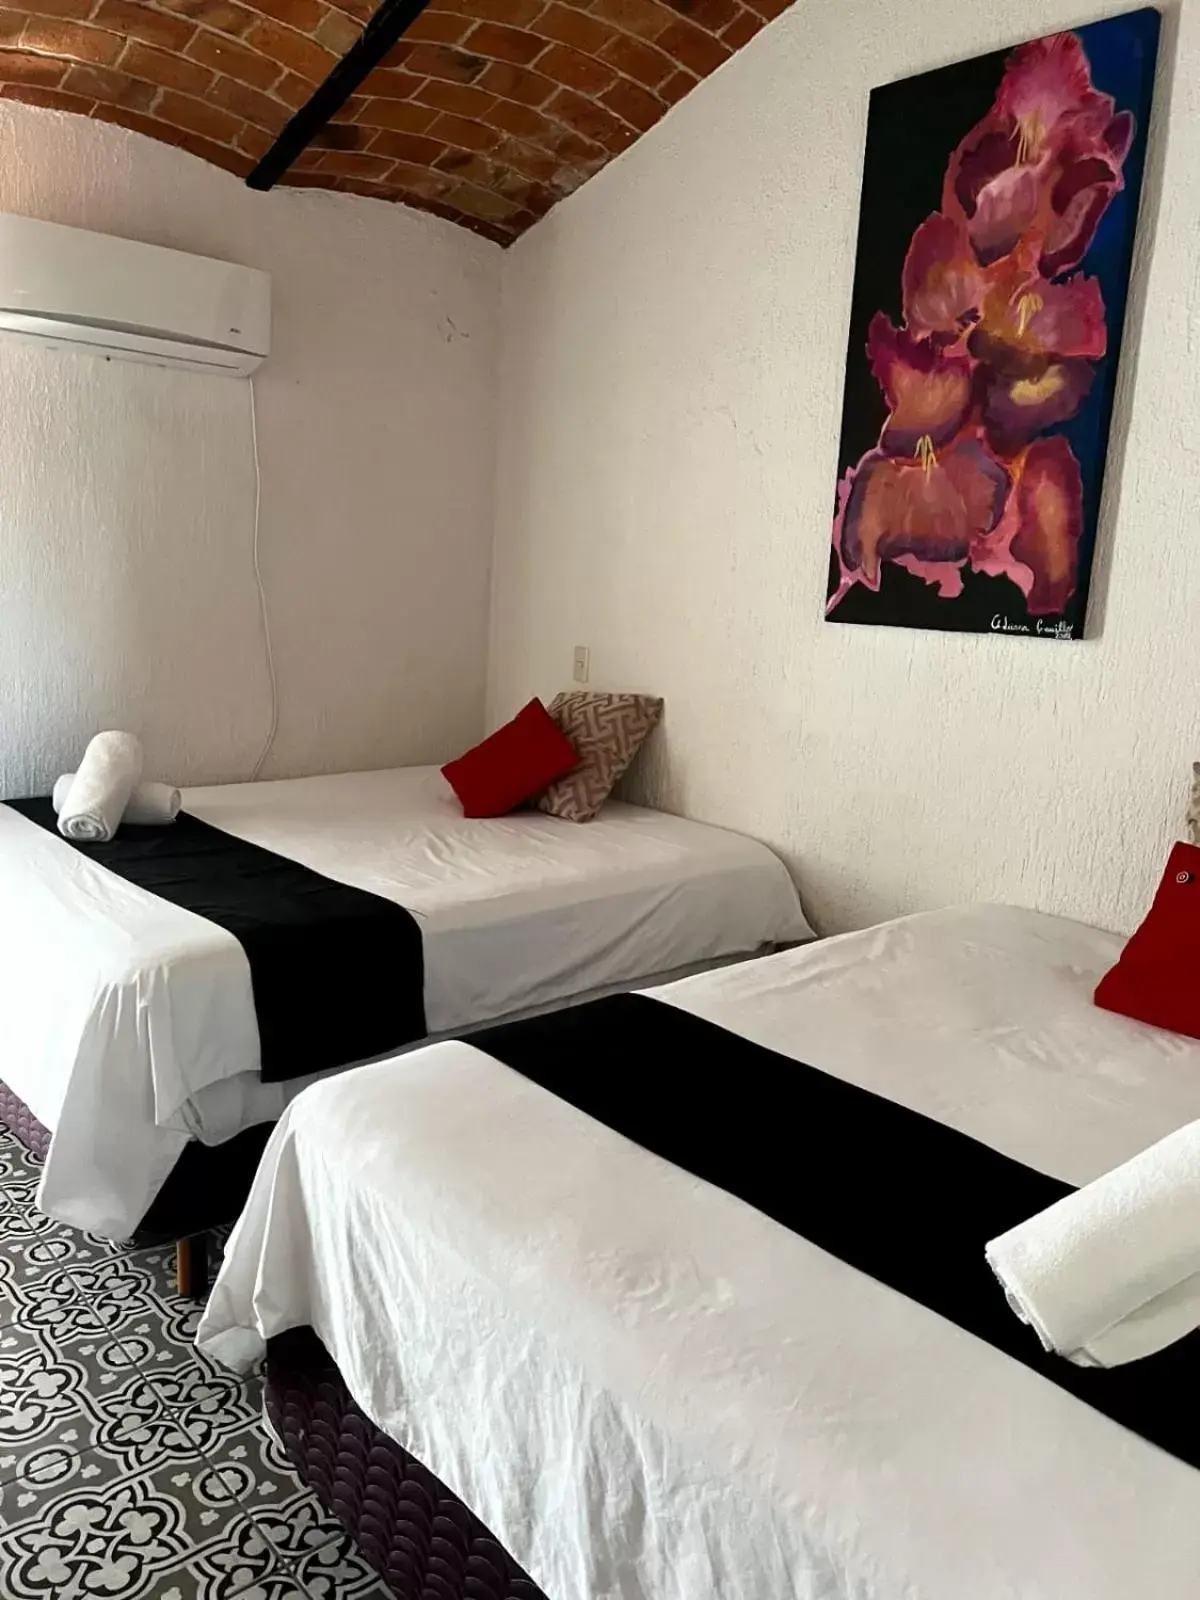 Bed in Hotel Villas Ajijic, Ajijic Chapala Jalisco